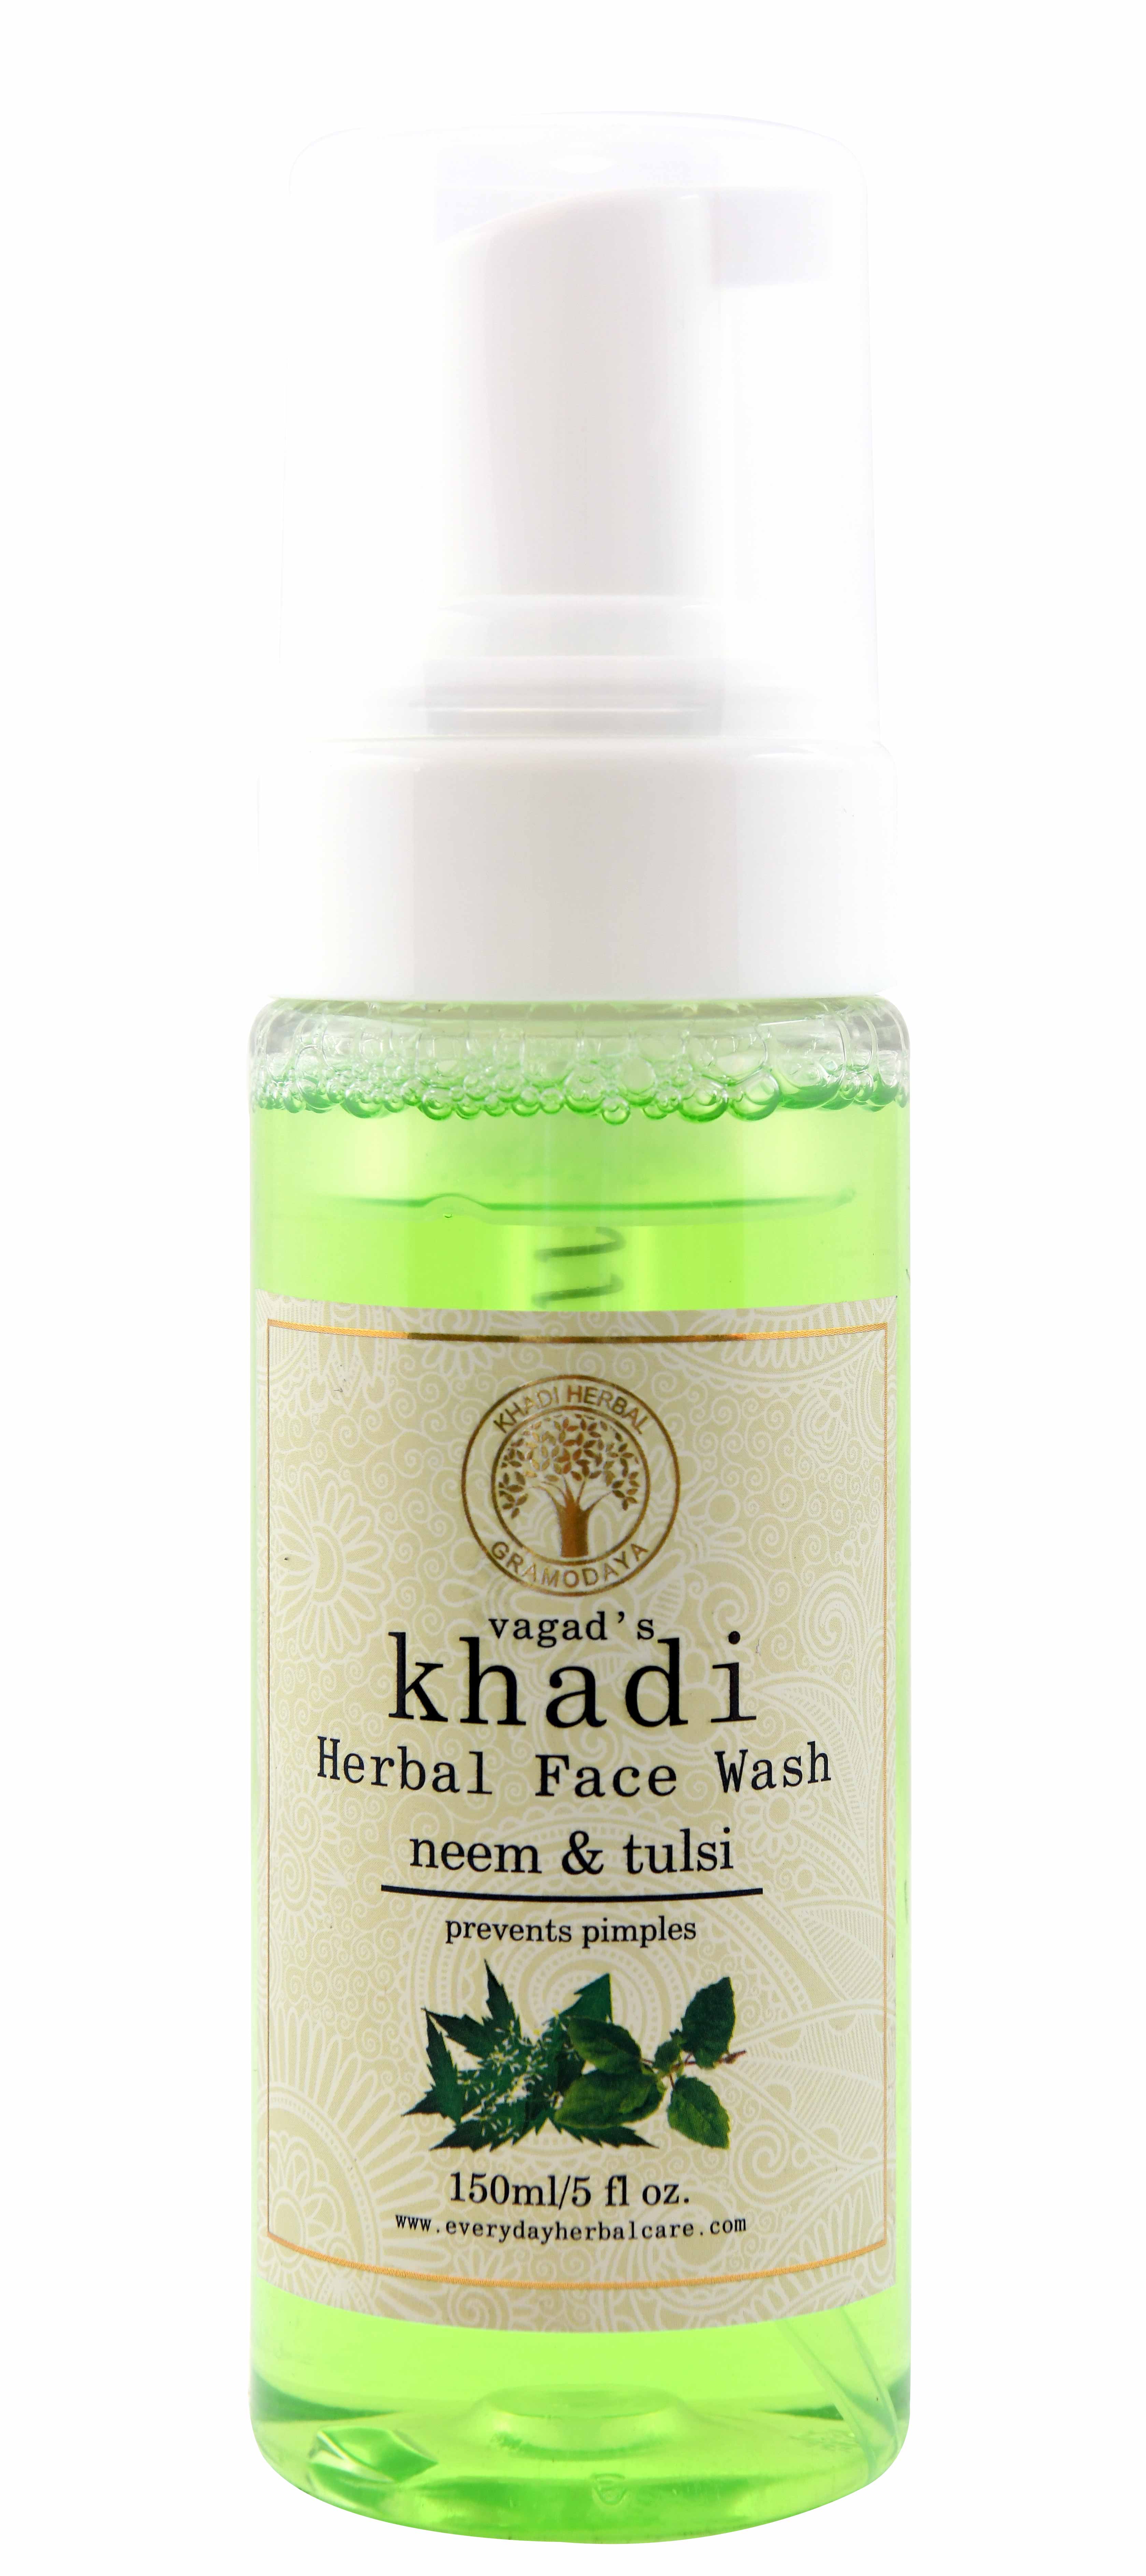 Vagad's Khadi Neem And Tulsi Face Wash